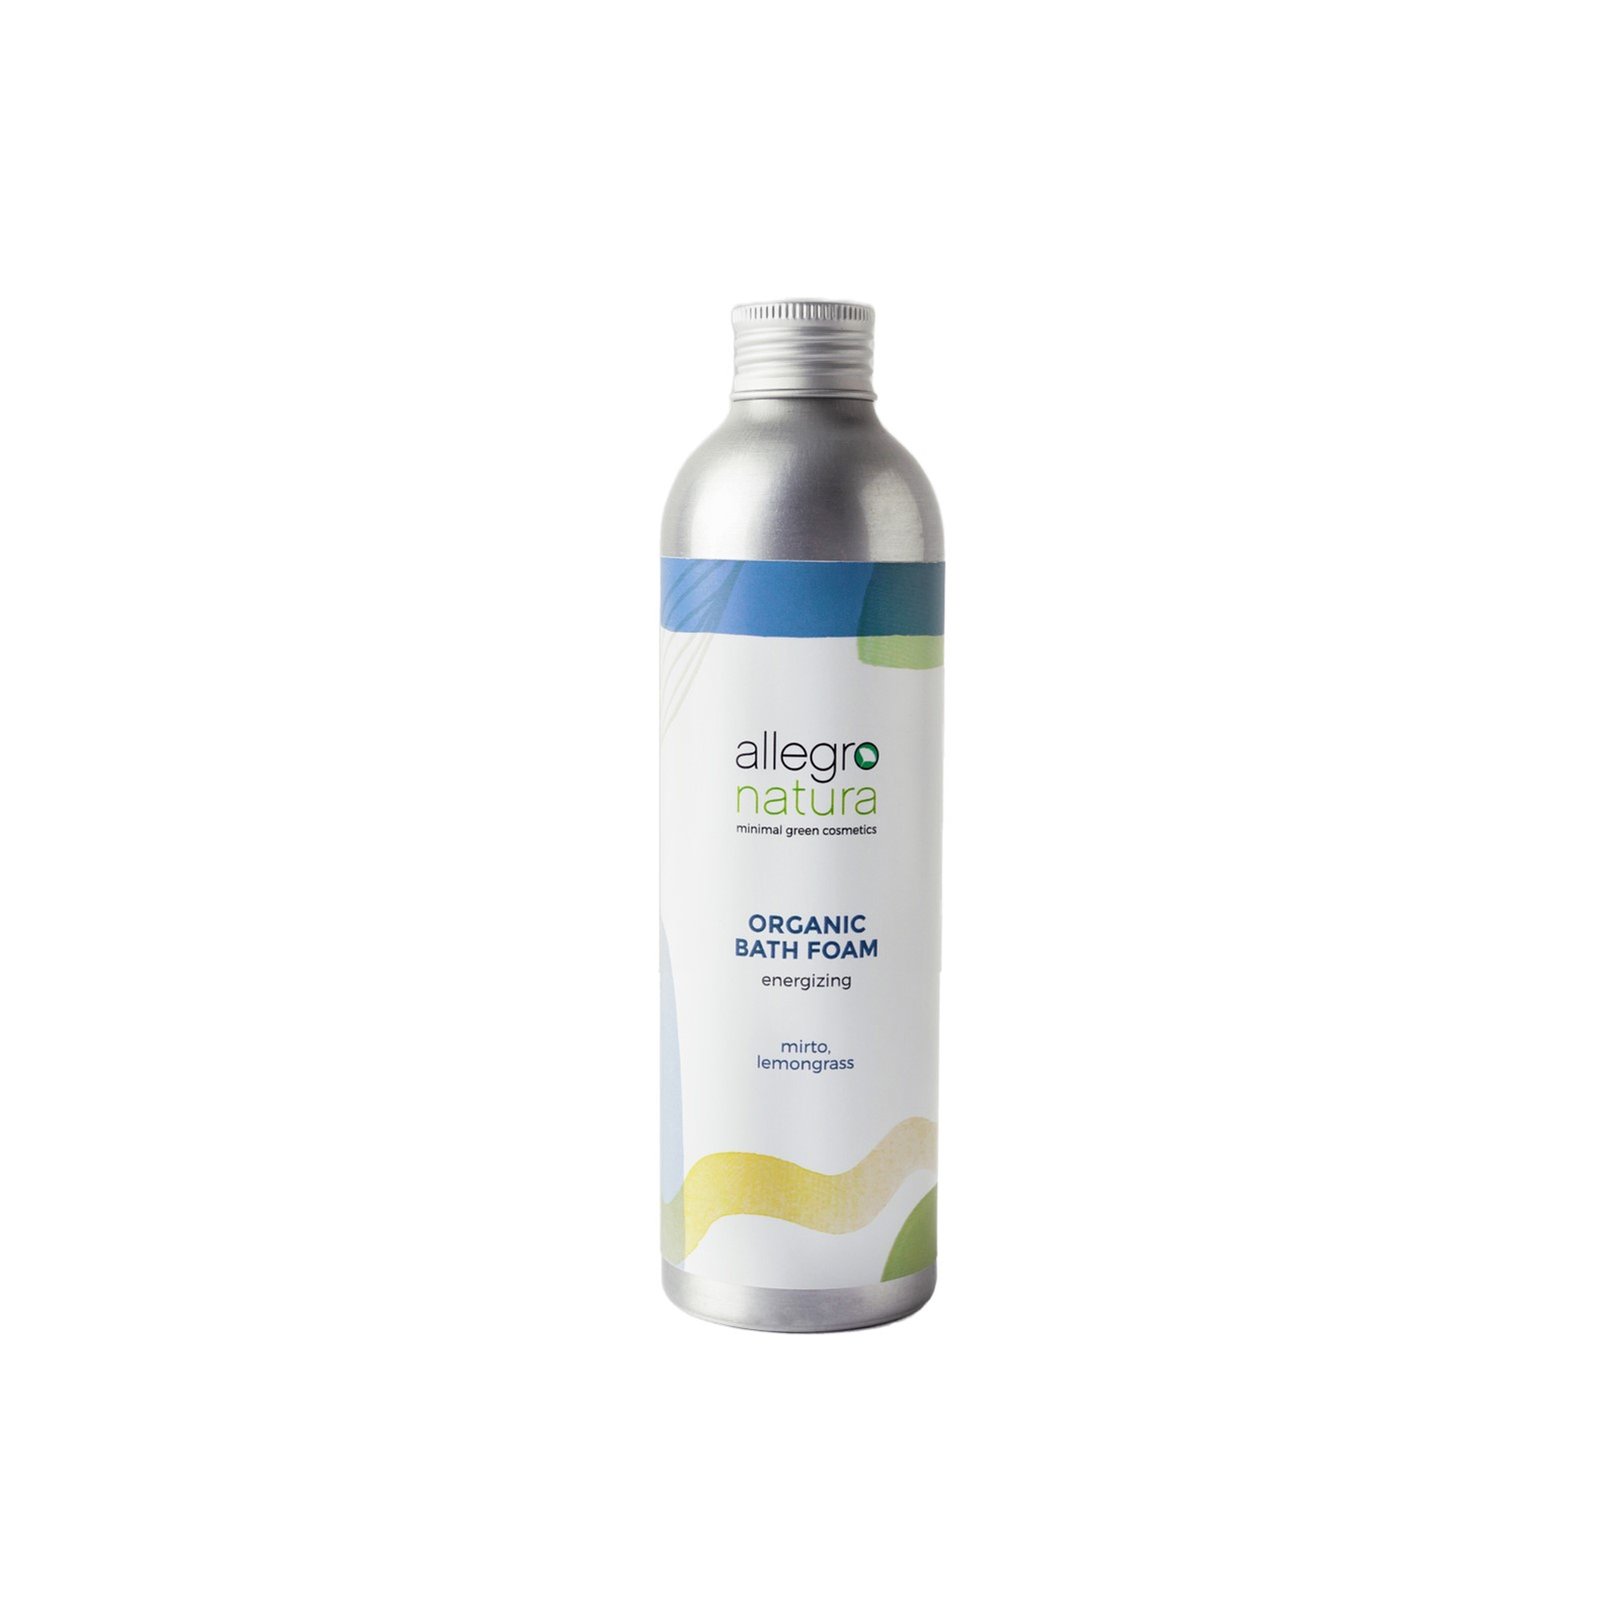 Allegro Natura Energizing Organic Bath Foam 250ml